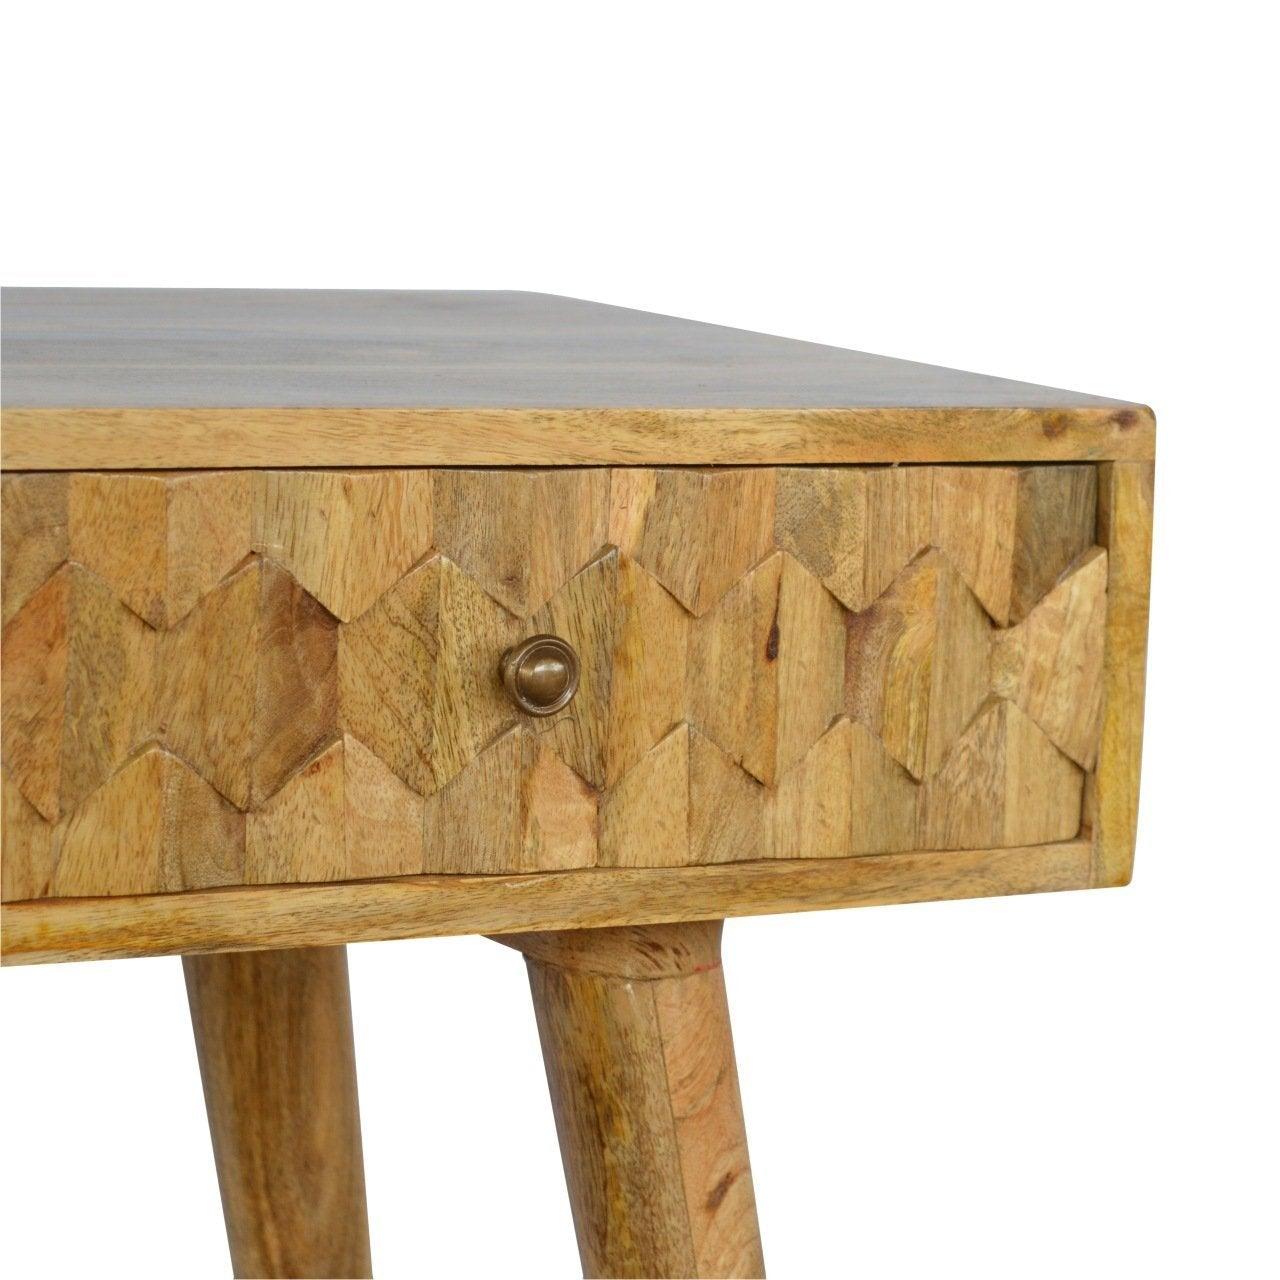 Pineapple carved console table - crimblefest furniture - image 4